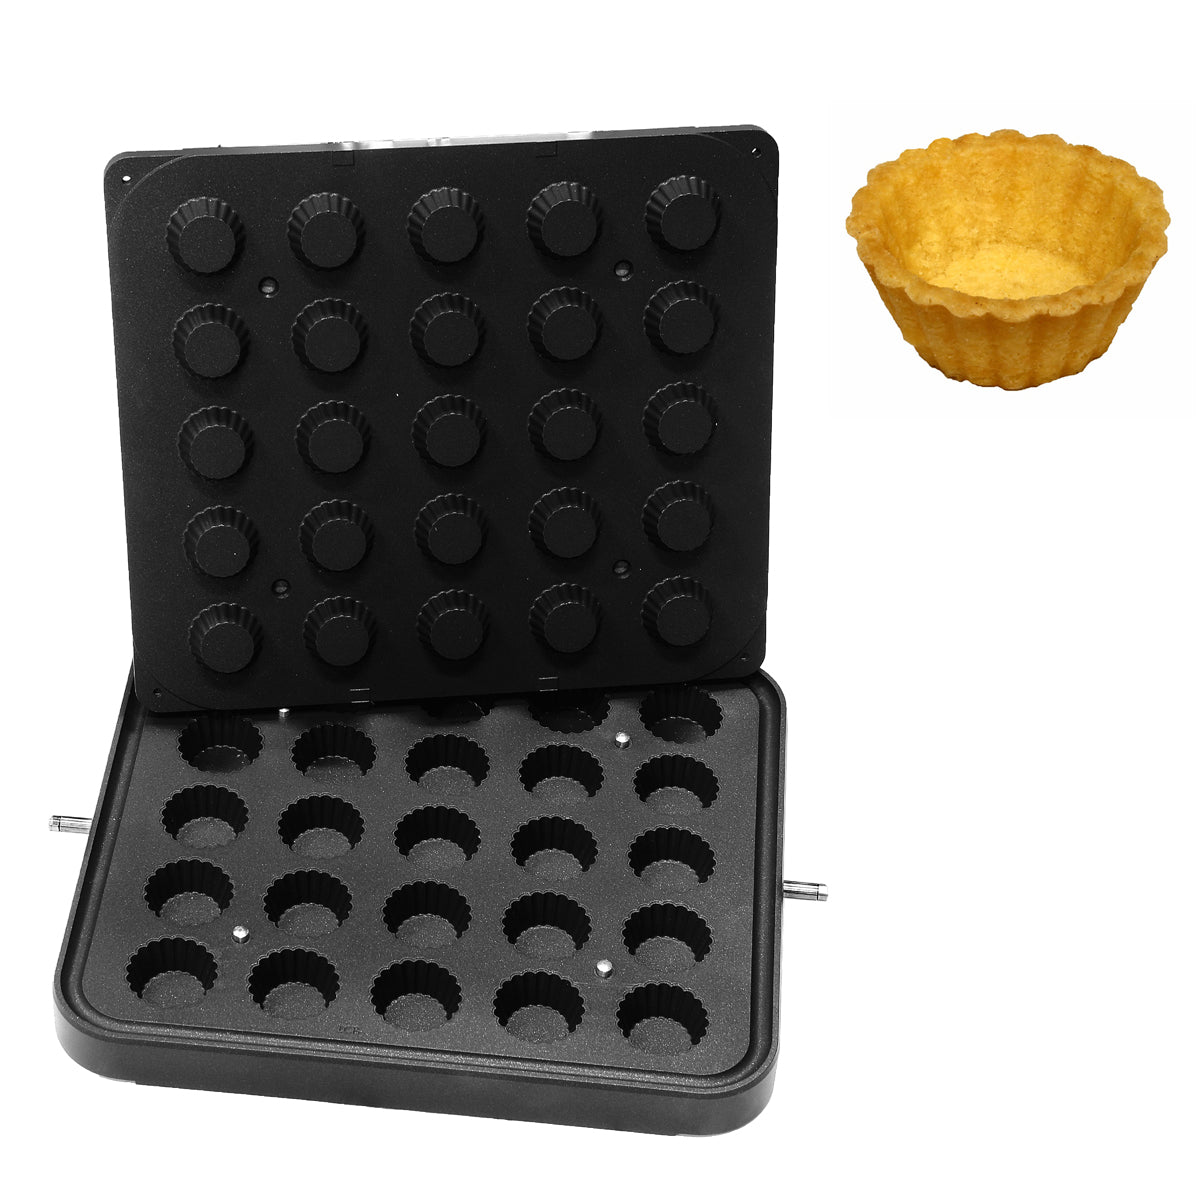 Tallerken til Muffins Maskin - Form: Cupcake - Ø 50 mm / Høyde: 21 mm